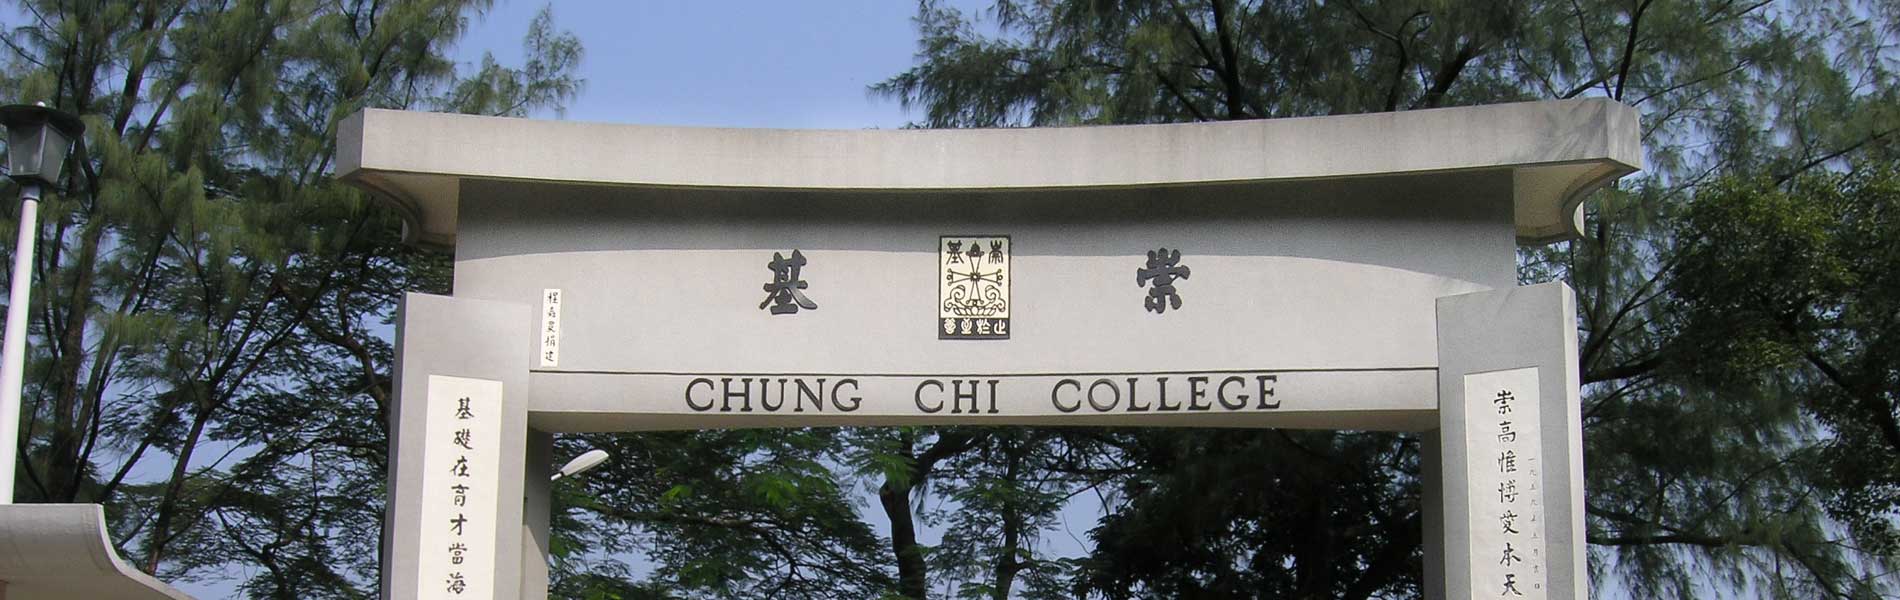 University YMCA Chung Chi College, The Chinese University of Hong Kong Photo